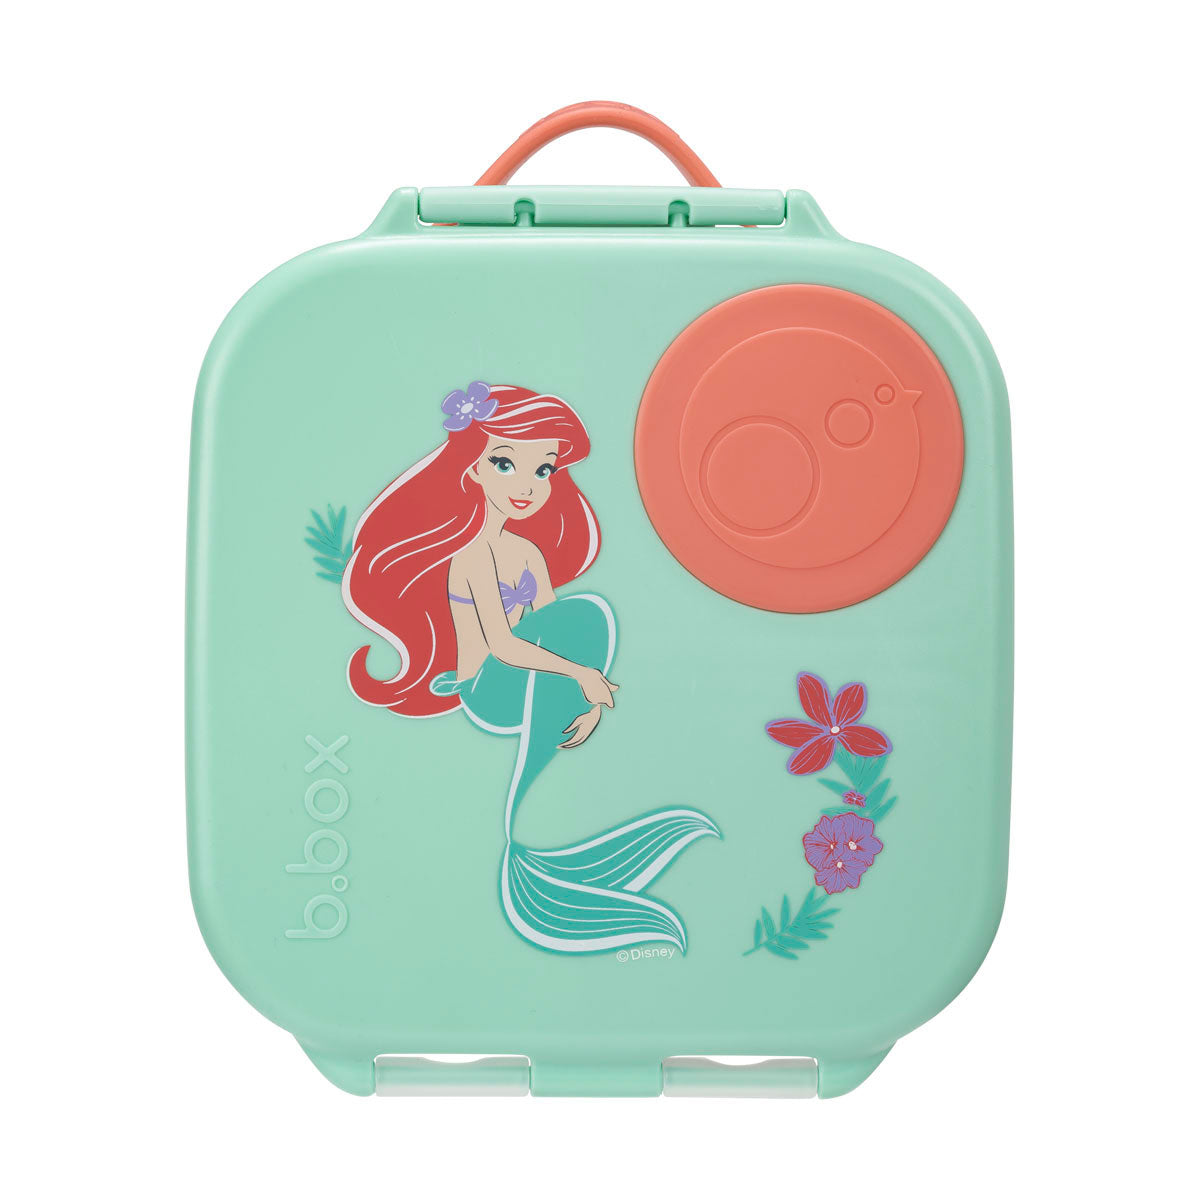 The Little Mermaid mini lunchbox by bbox